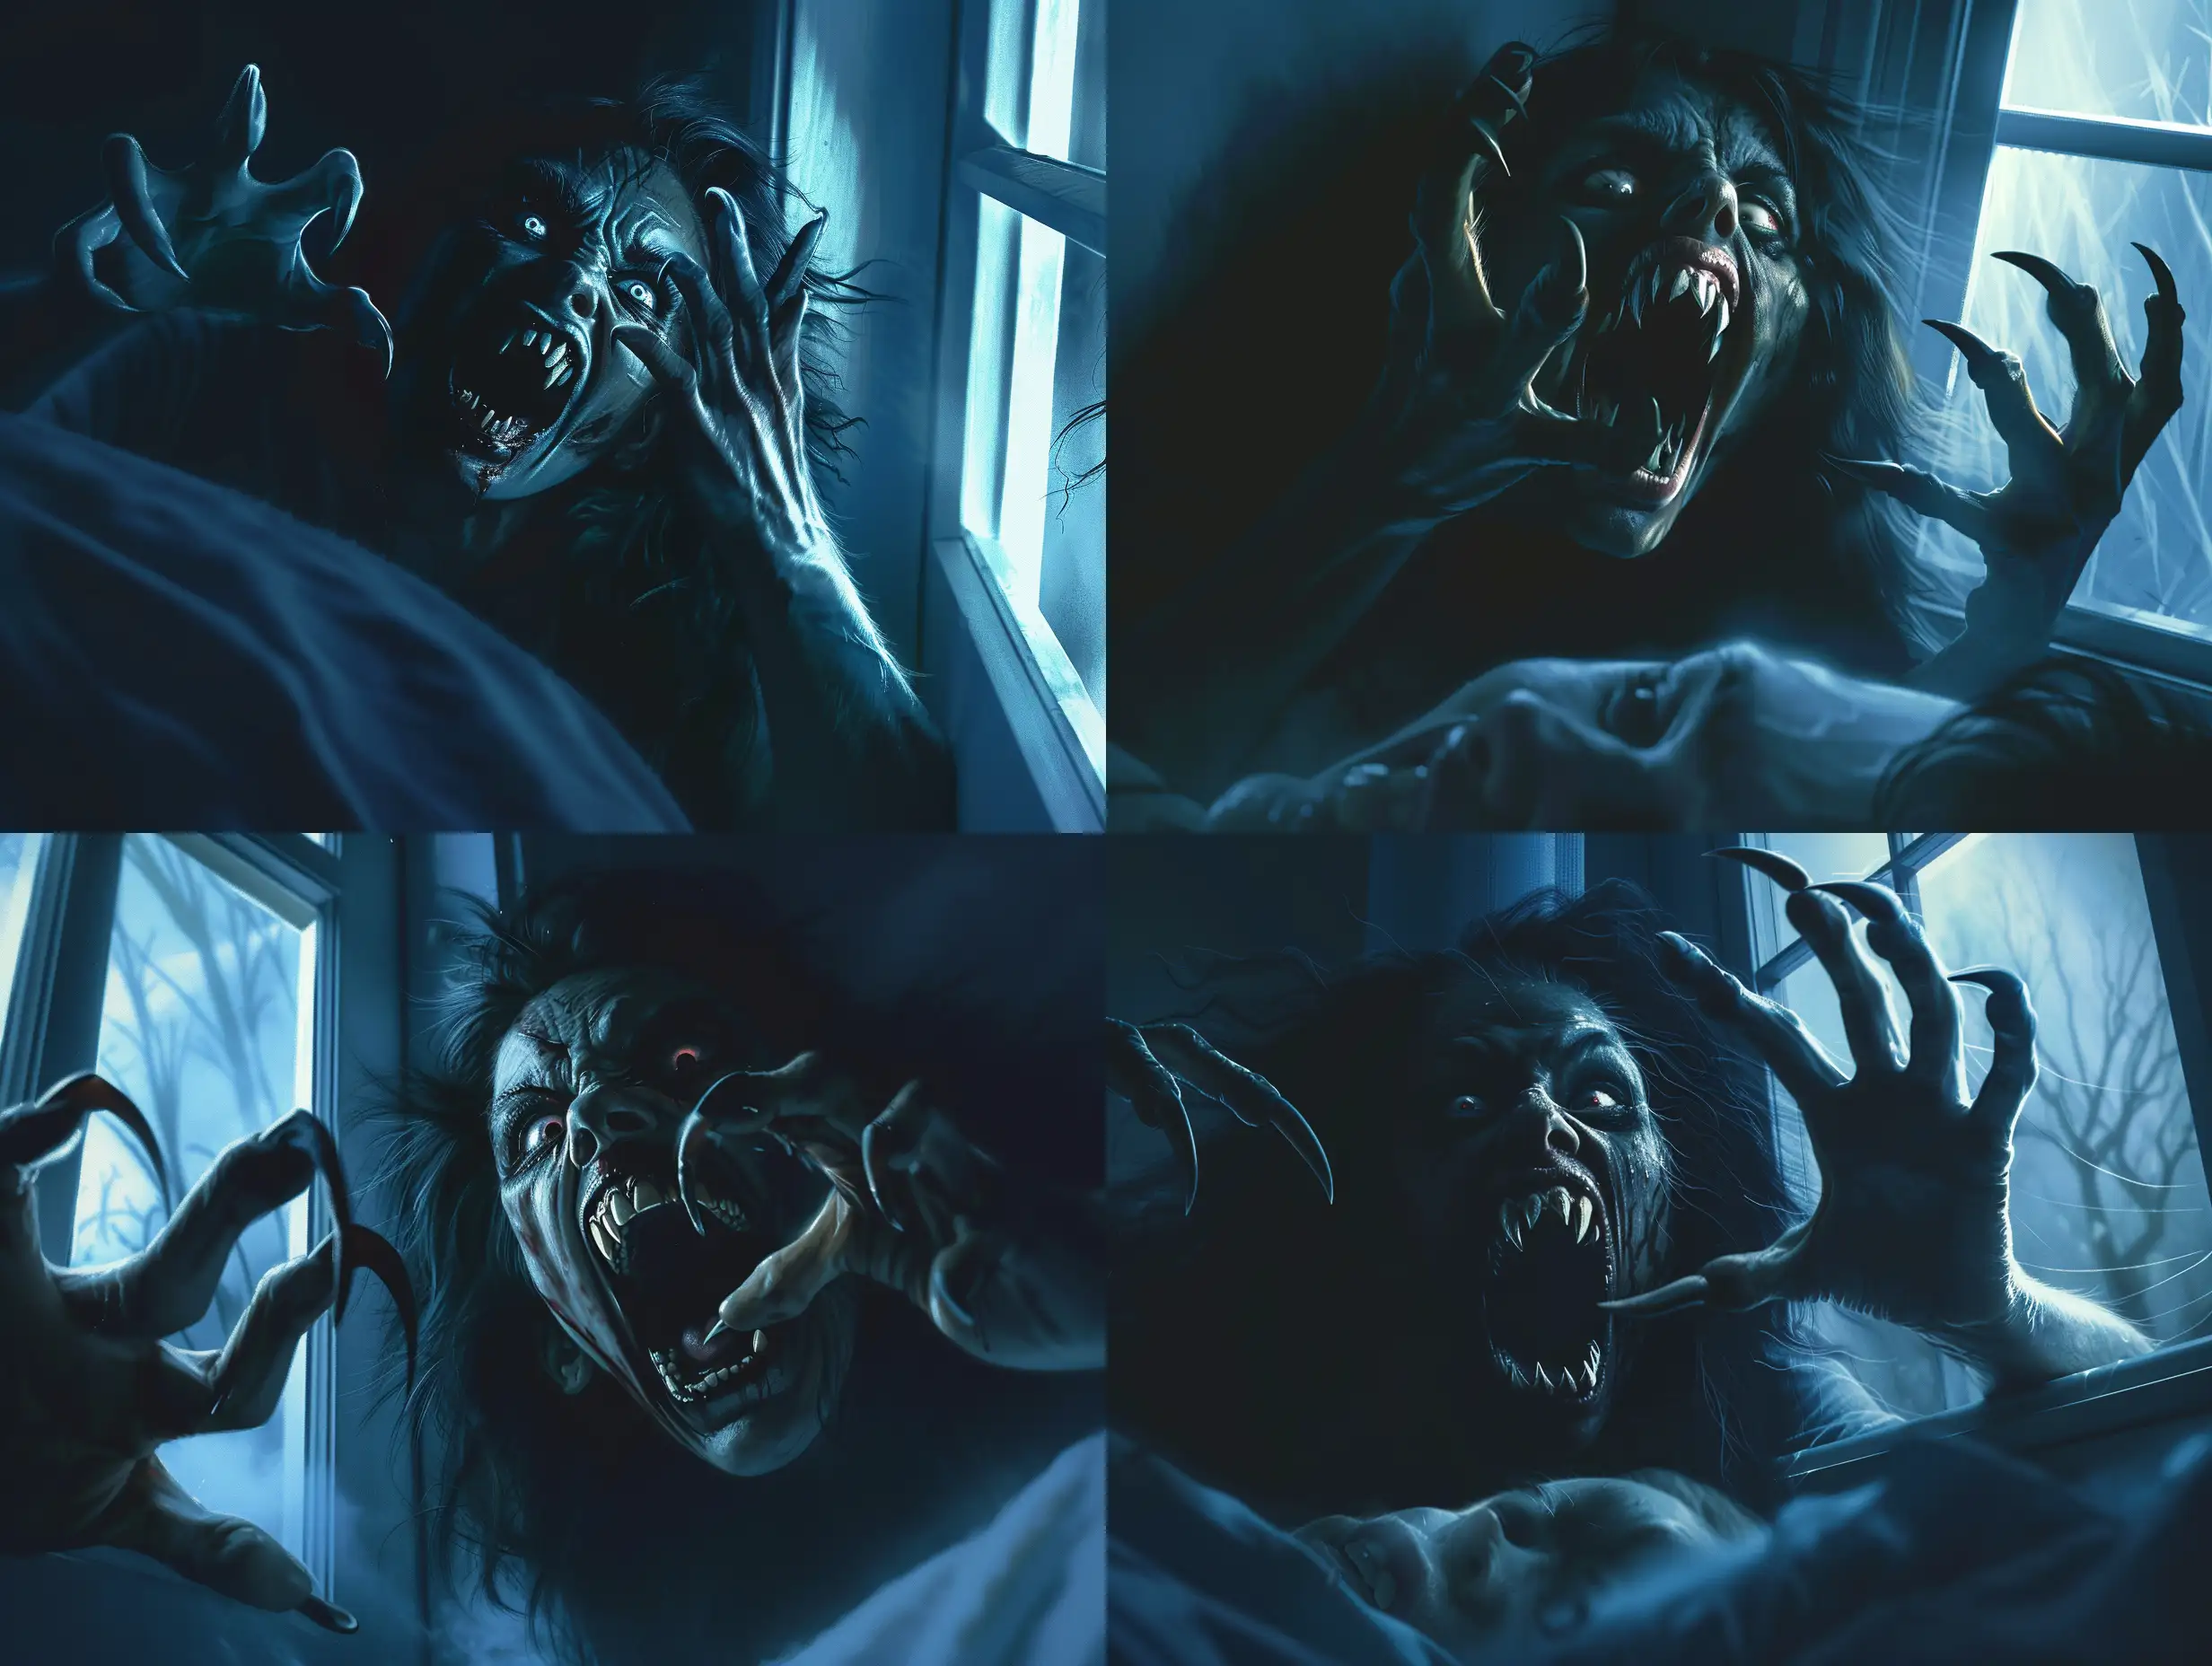 Menacing-Female-Vampire-Nightmare-Scene-with-Long-Curved-Fingernails